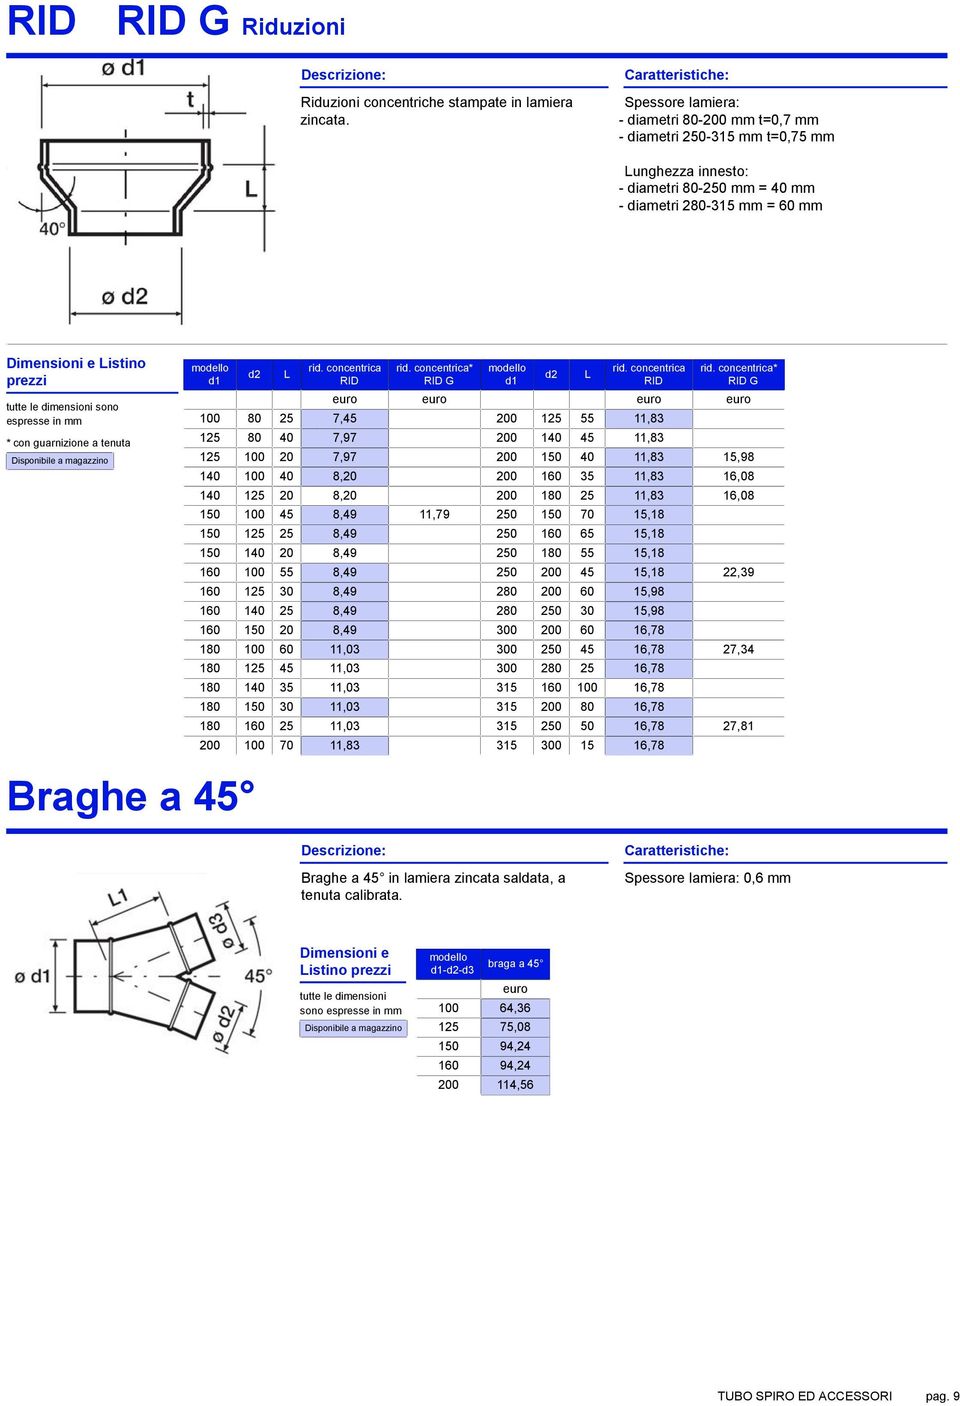 Braghe a 45 d2 L rid. concentrica RID rid.